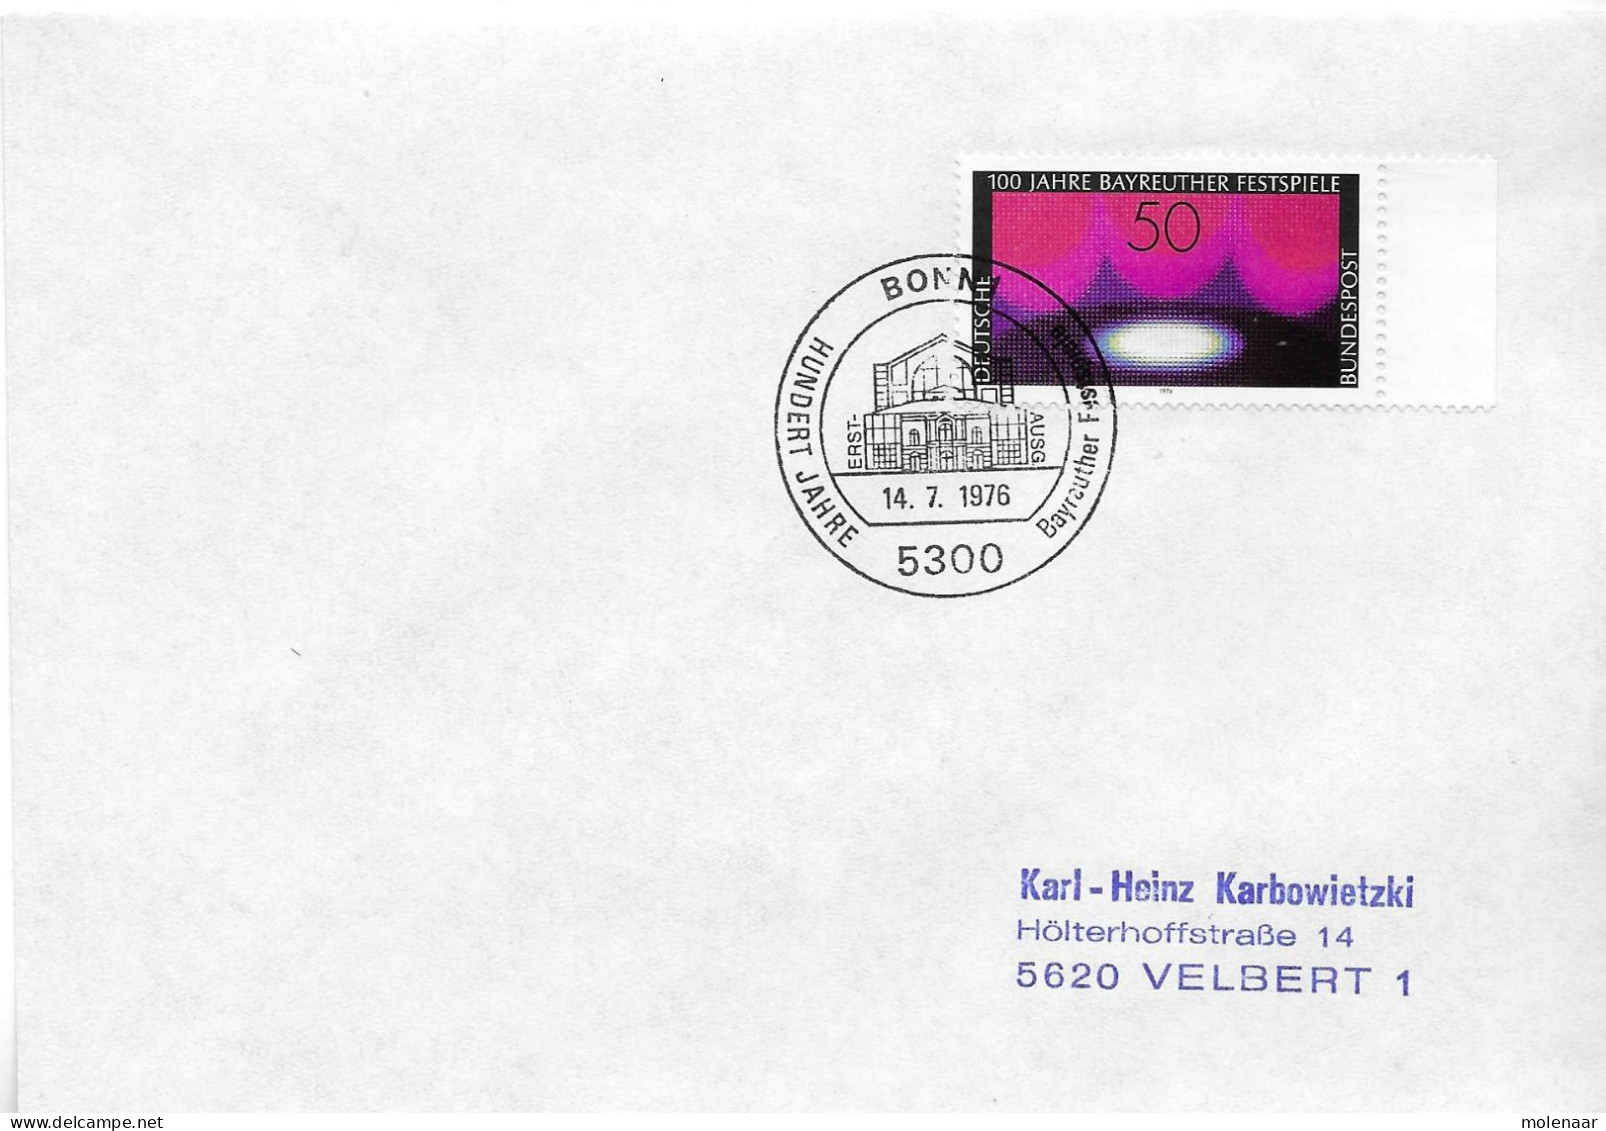 Postzegels > Europa > Duitsland > West-Duitsland > 1970-1979 > Brief Met No. 896  (17378) - Cartas & Documentos